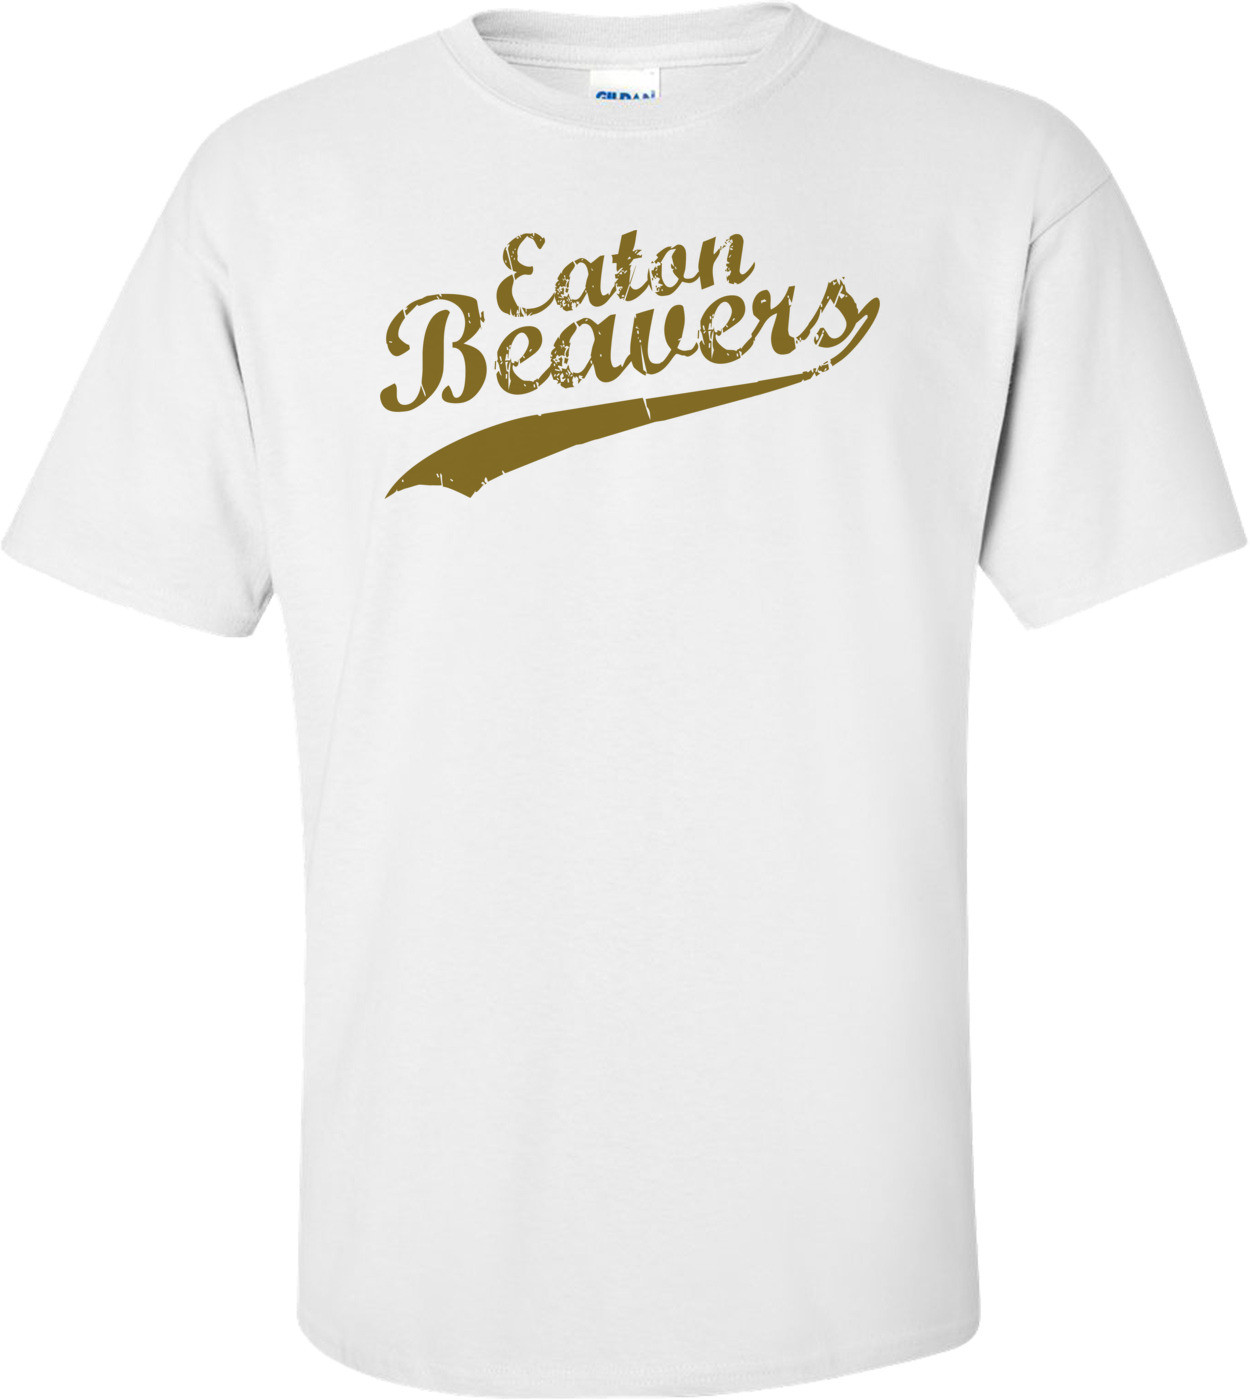 Eaton Beavers T-shirt